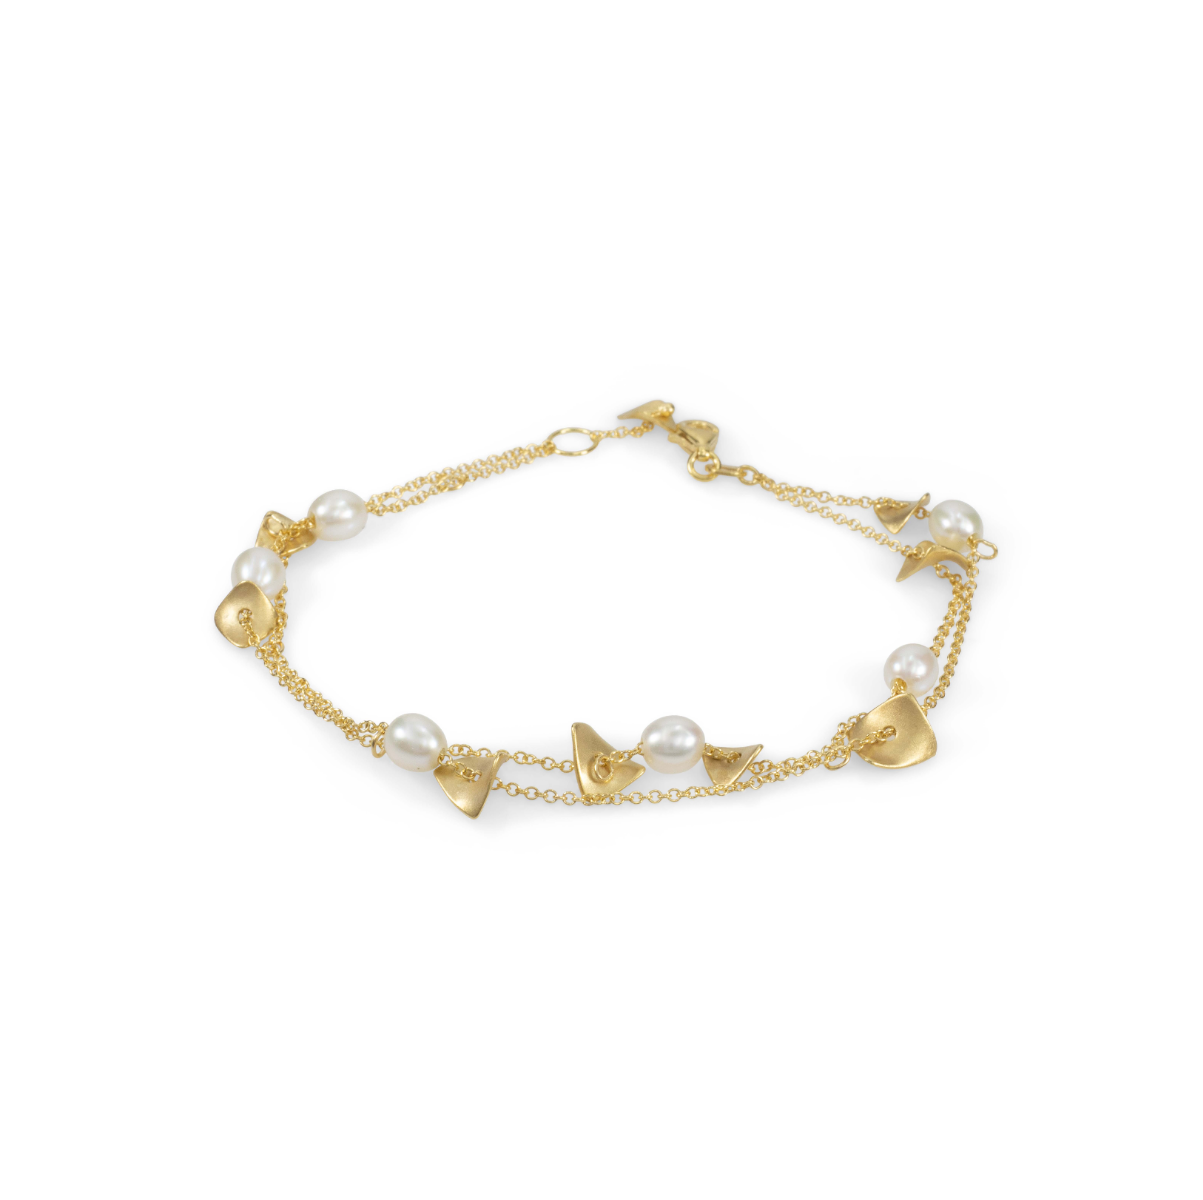 PACHAREE Spirit Animal gold-plated pearl charm bracelet